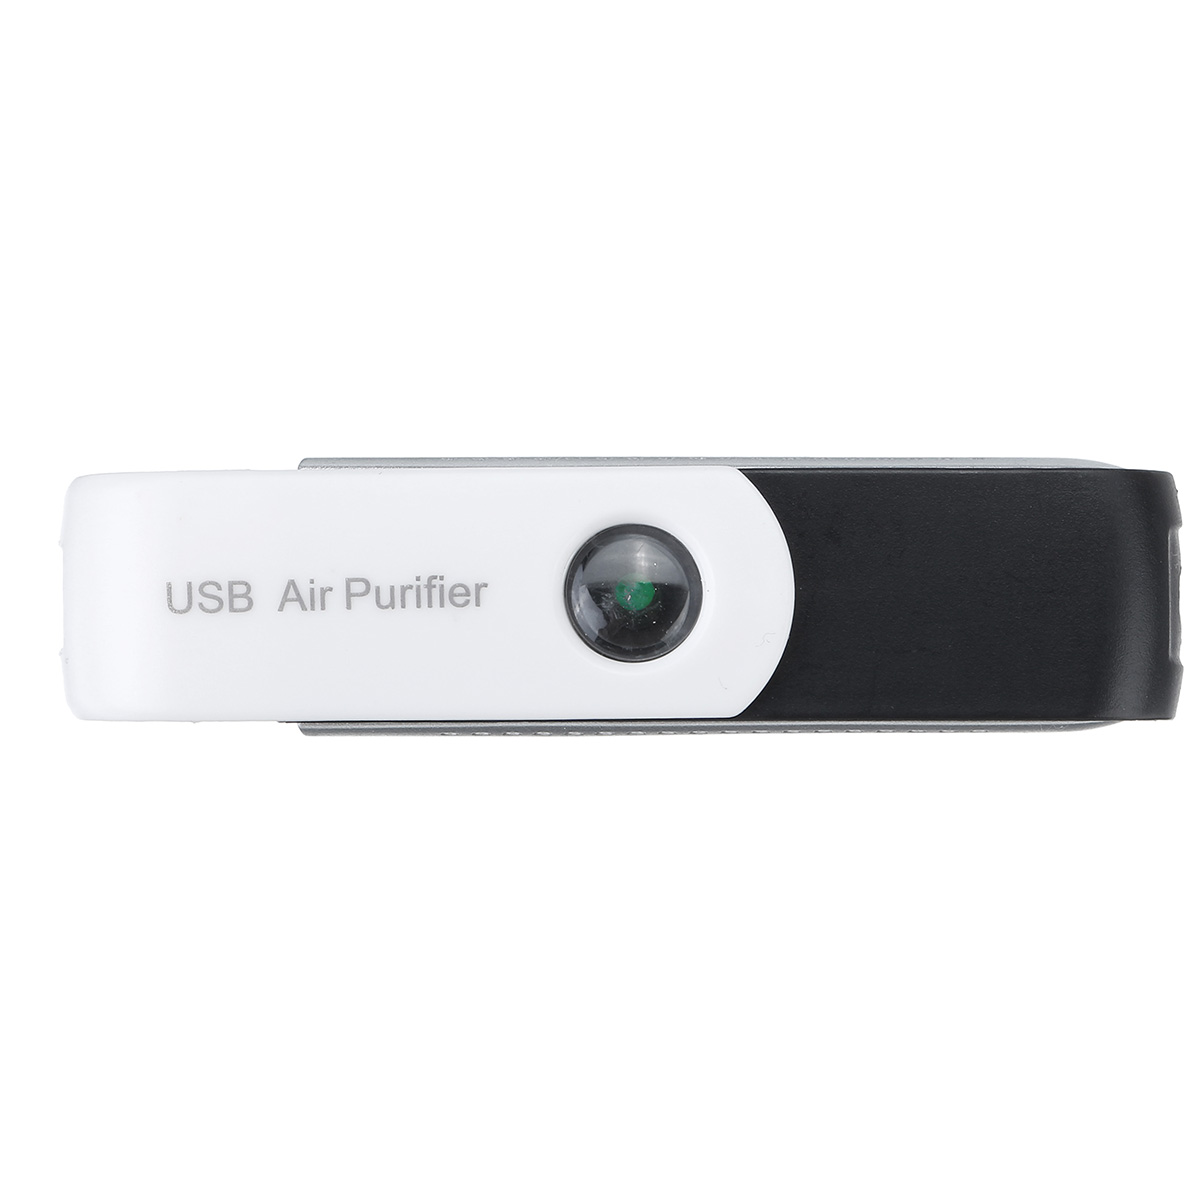 USB-Air-Purifier-Active-Oxygen-Removal-Formaldehyde-Smoke-Odor-Sterilization-1662504-1